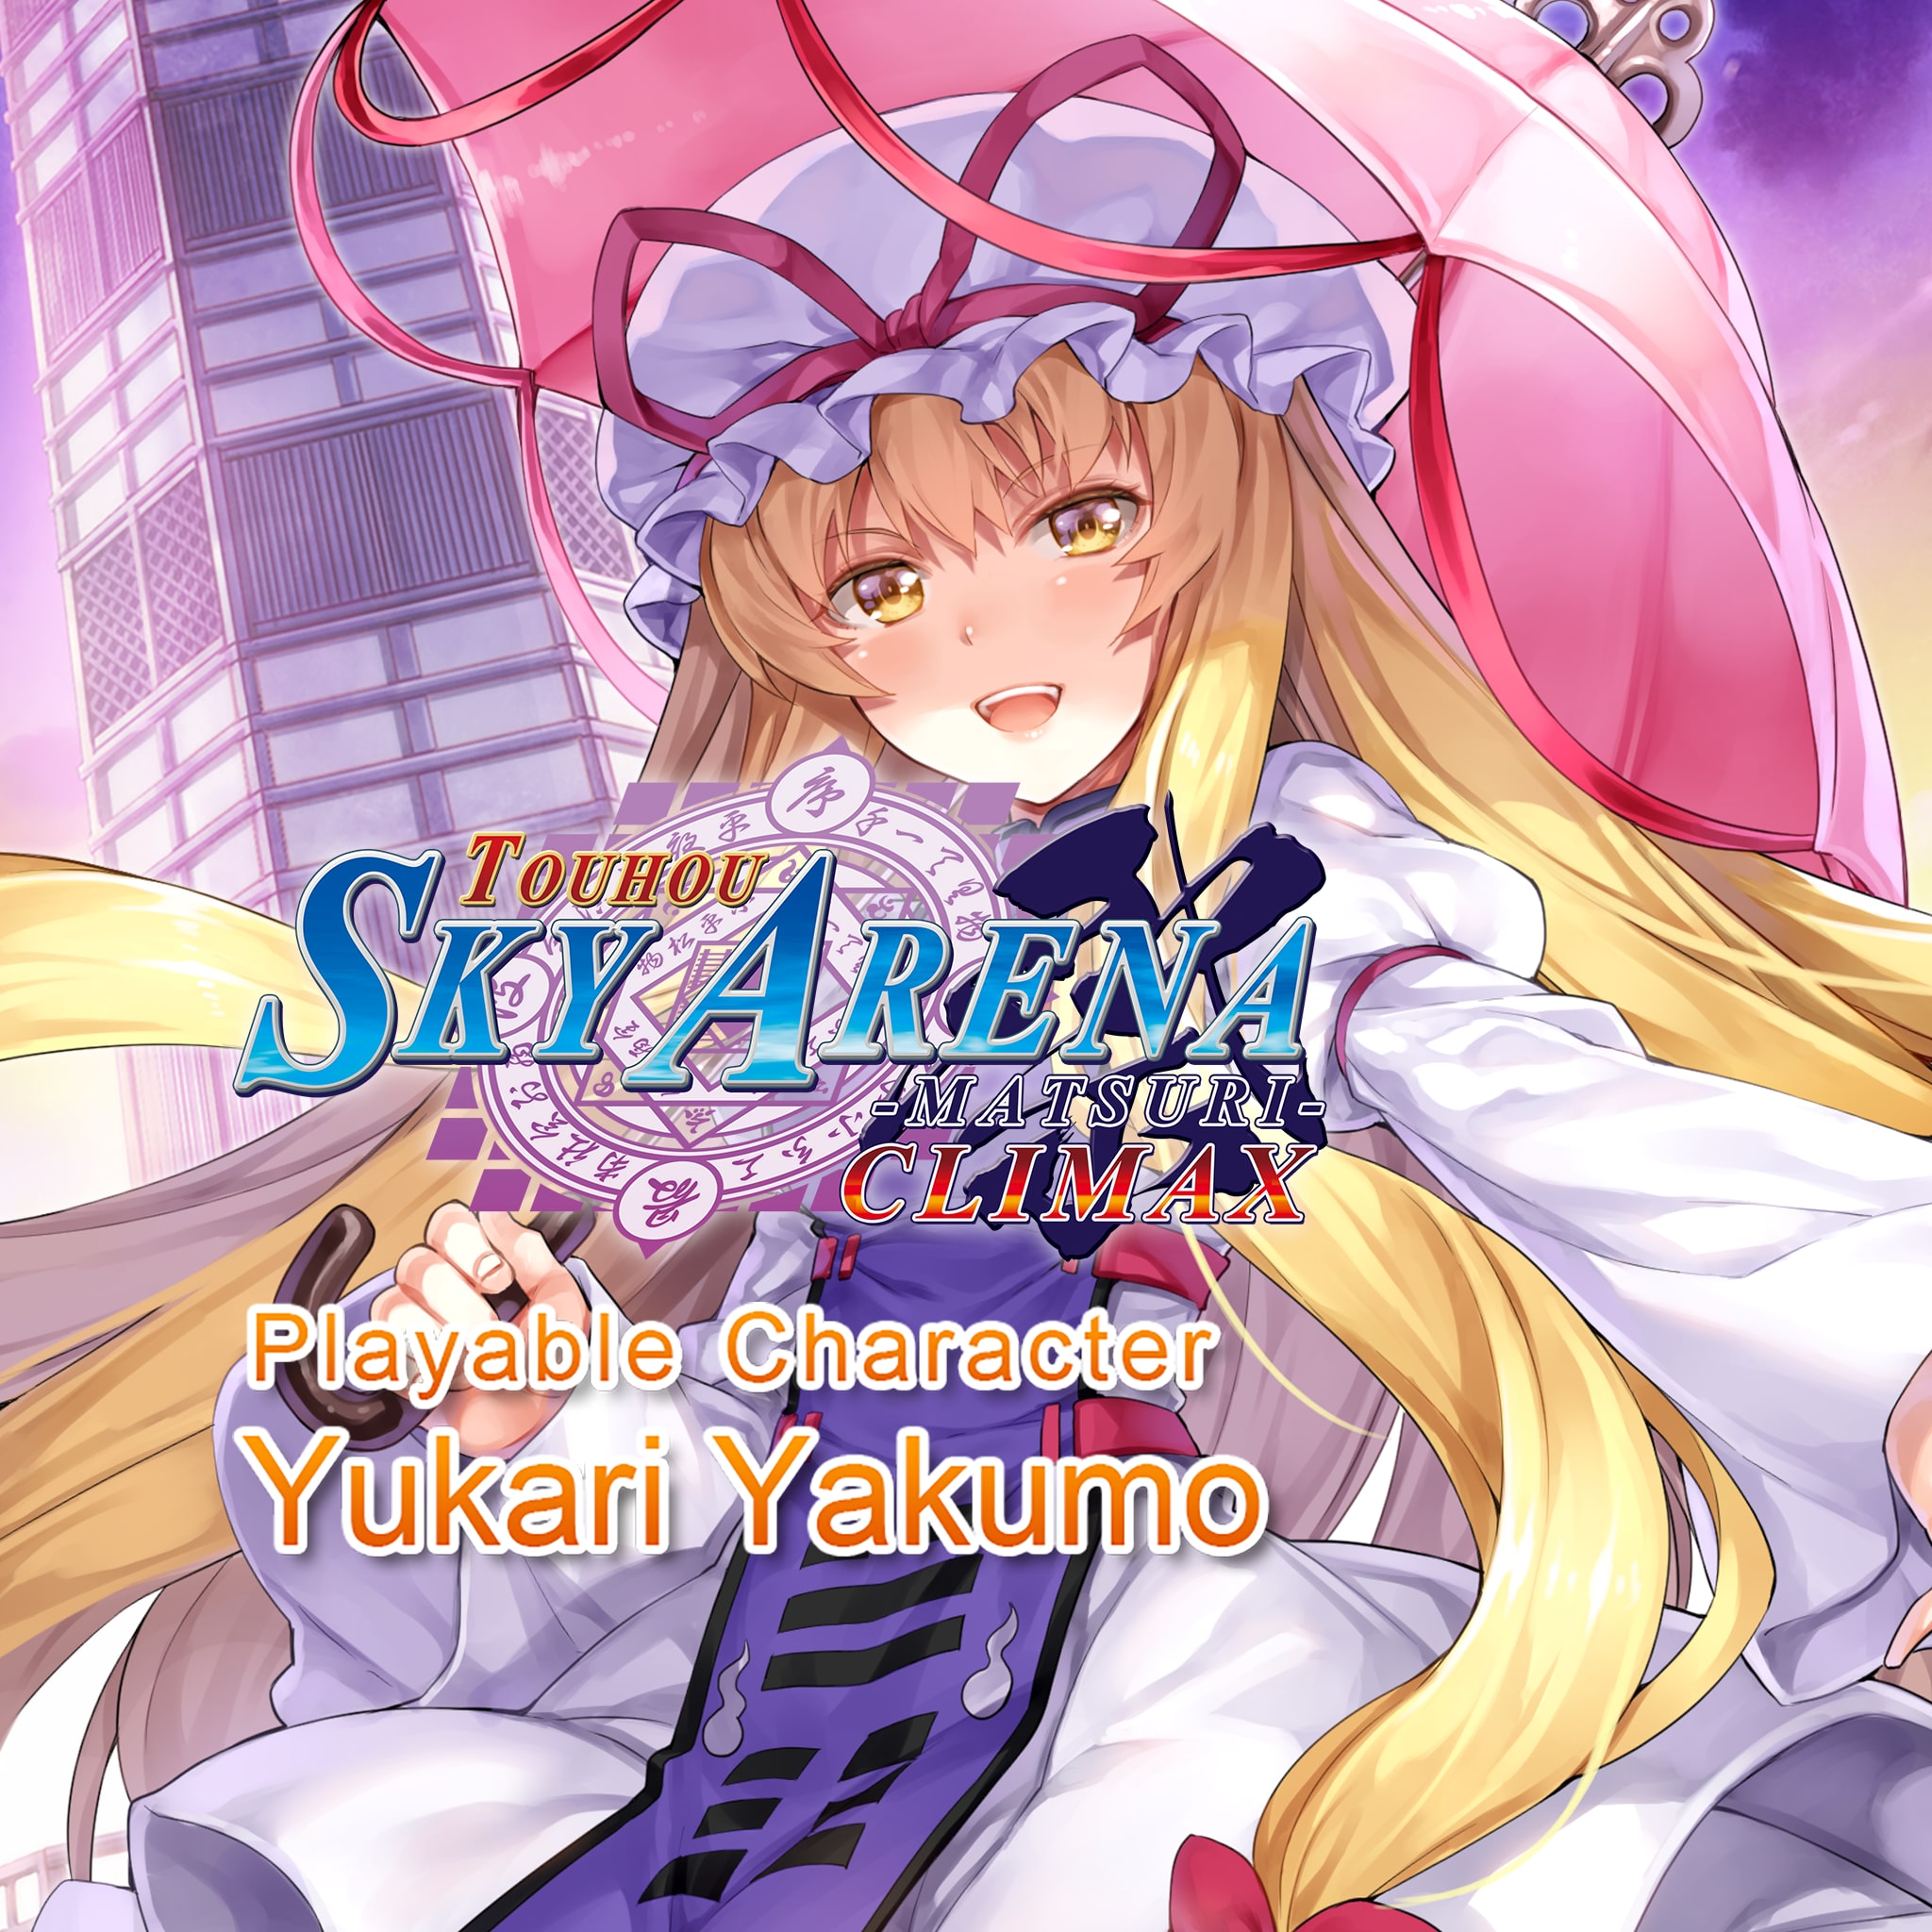 Touhou Sky Arena Playable Character 'Yukari Yakumo'